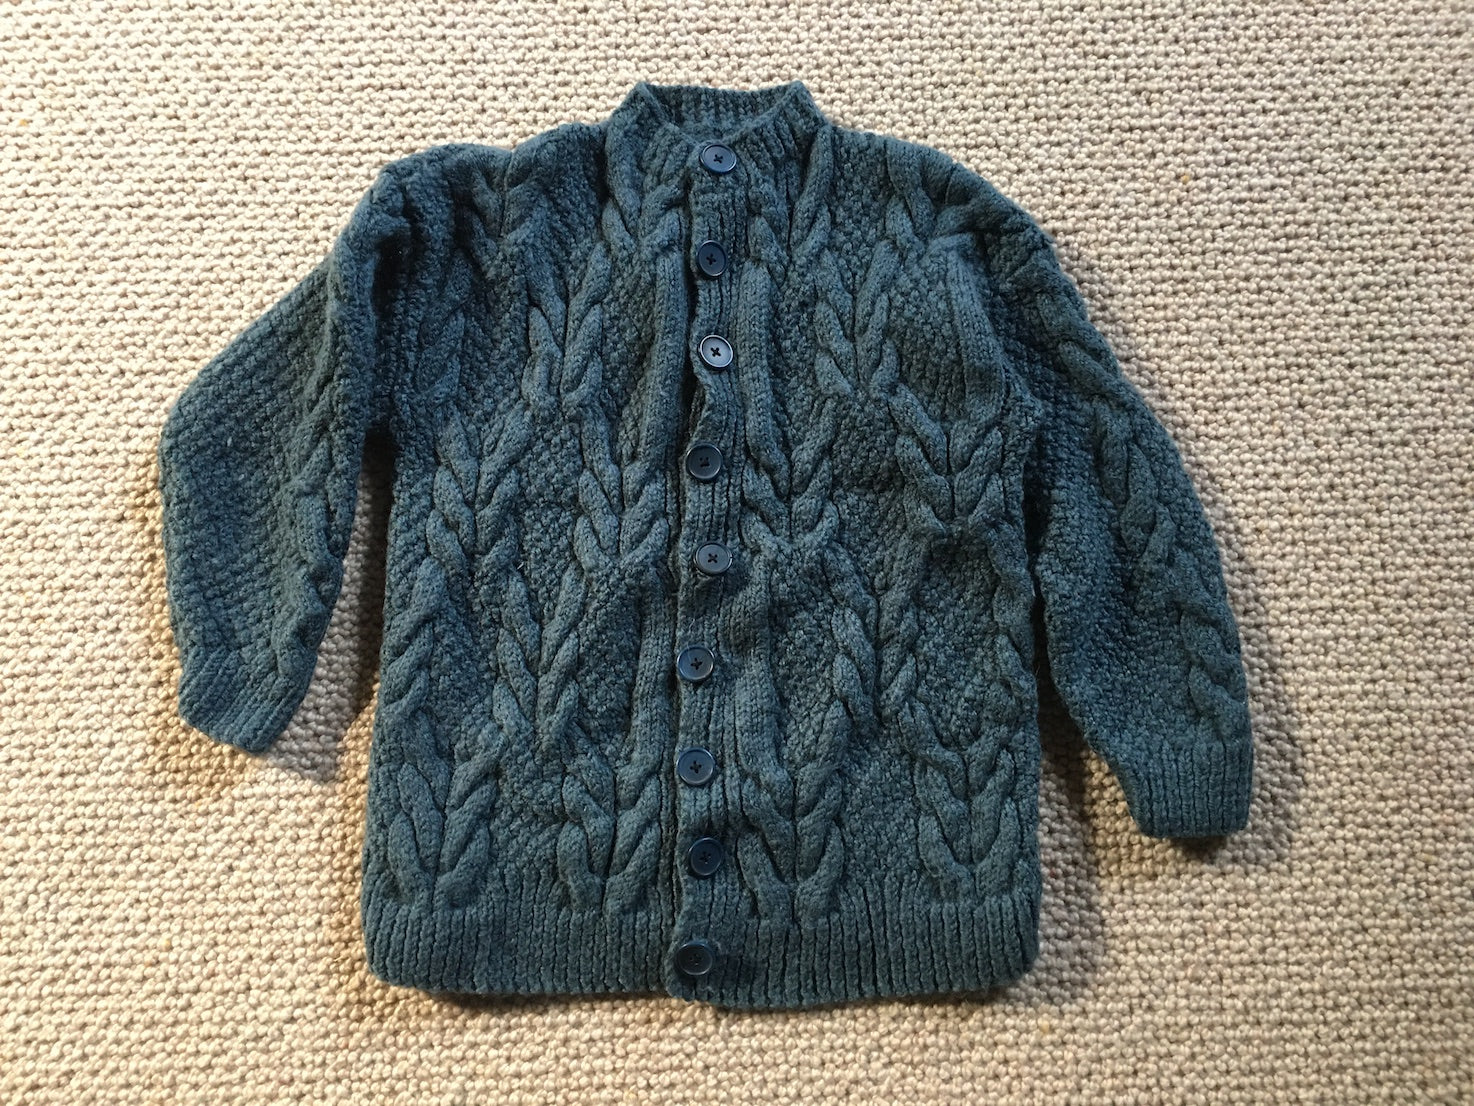 Kids Vintage Cable Knit Cardigan  #C106 FREE AUS POSTAGE